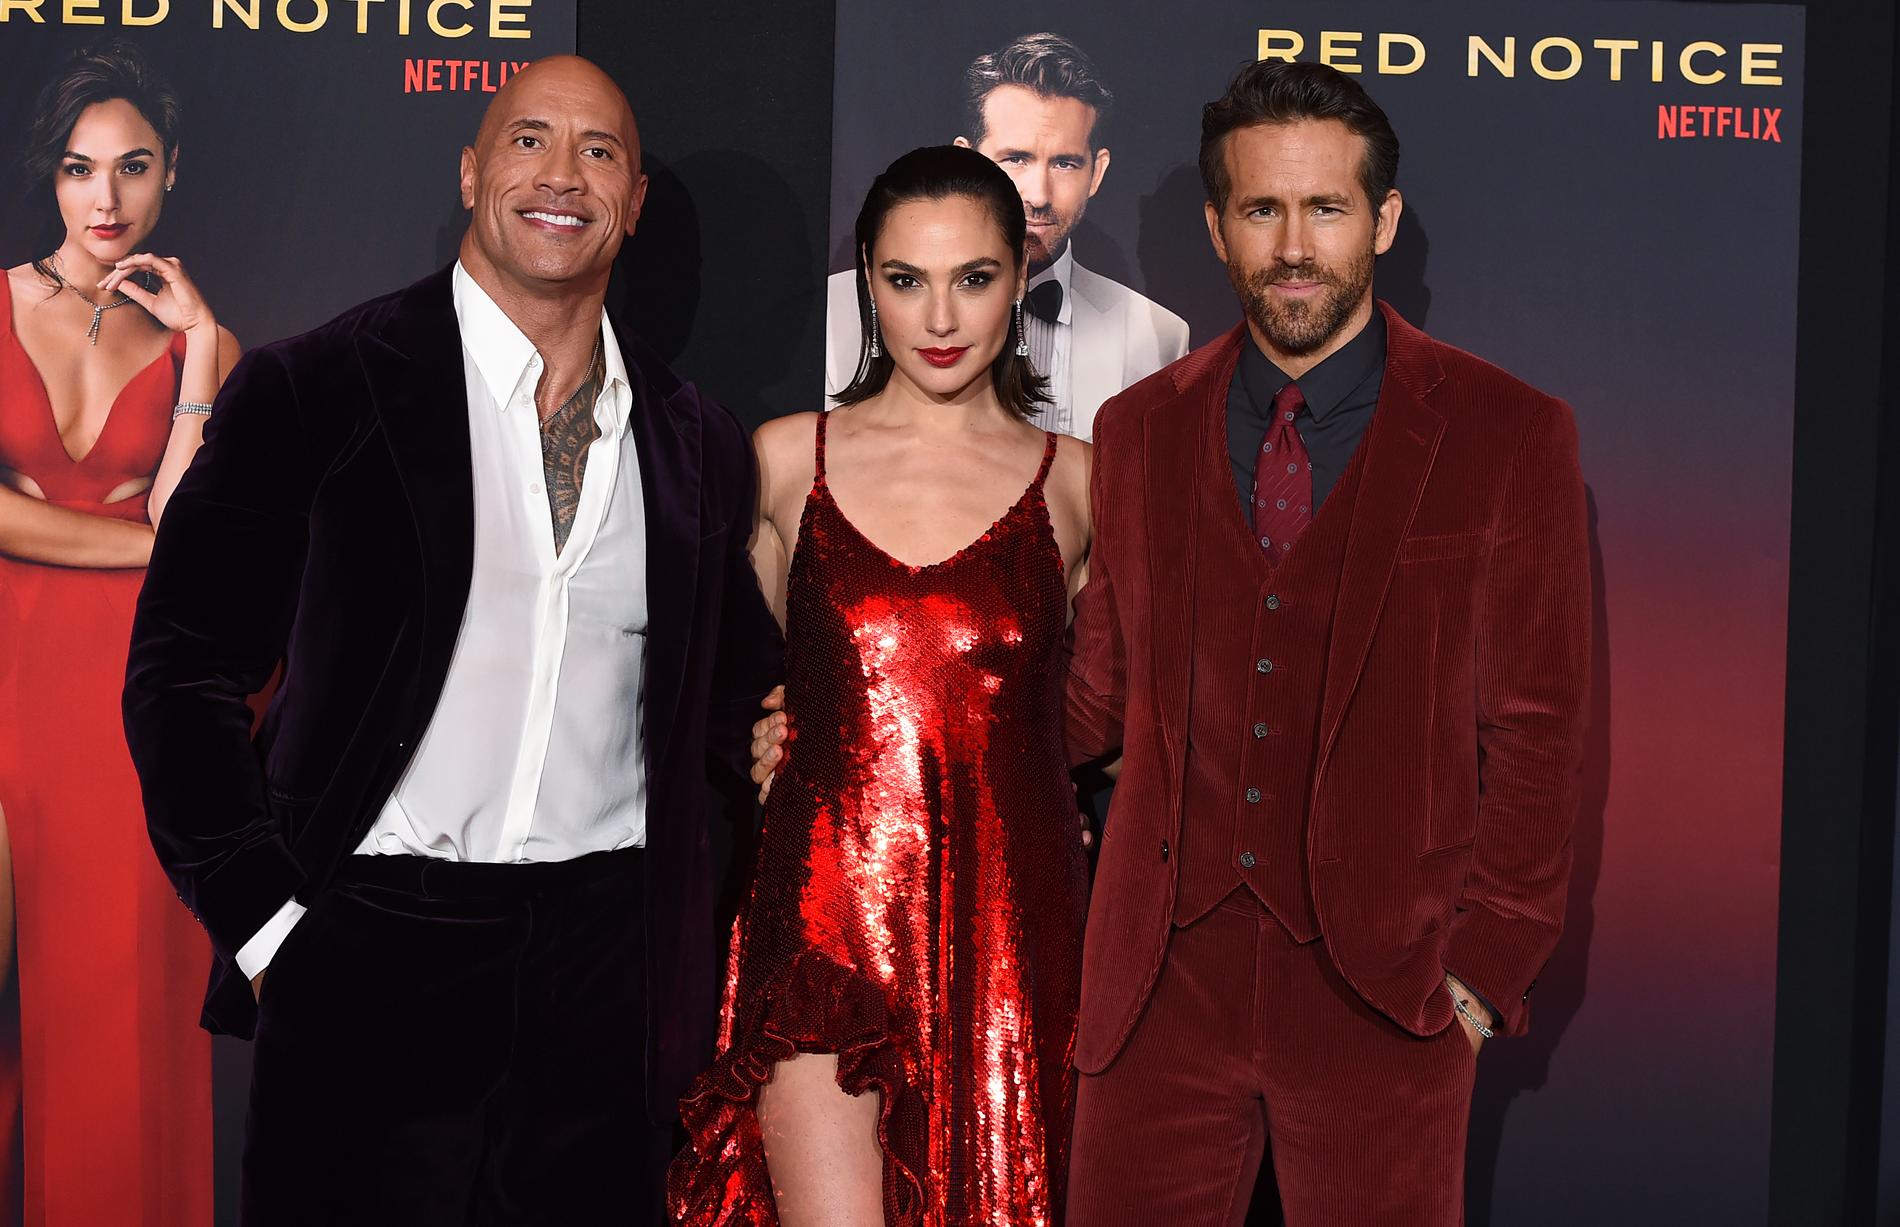 Reynolds: "Red notice" slog rekord på Netflix